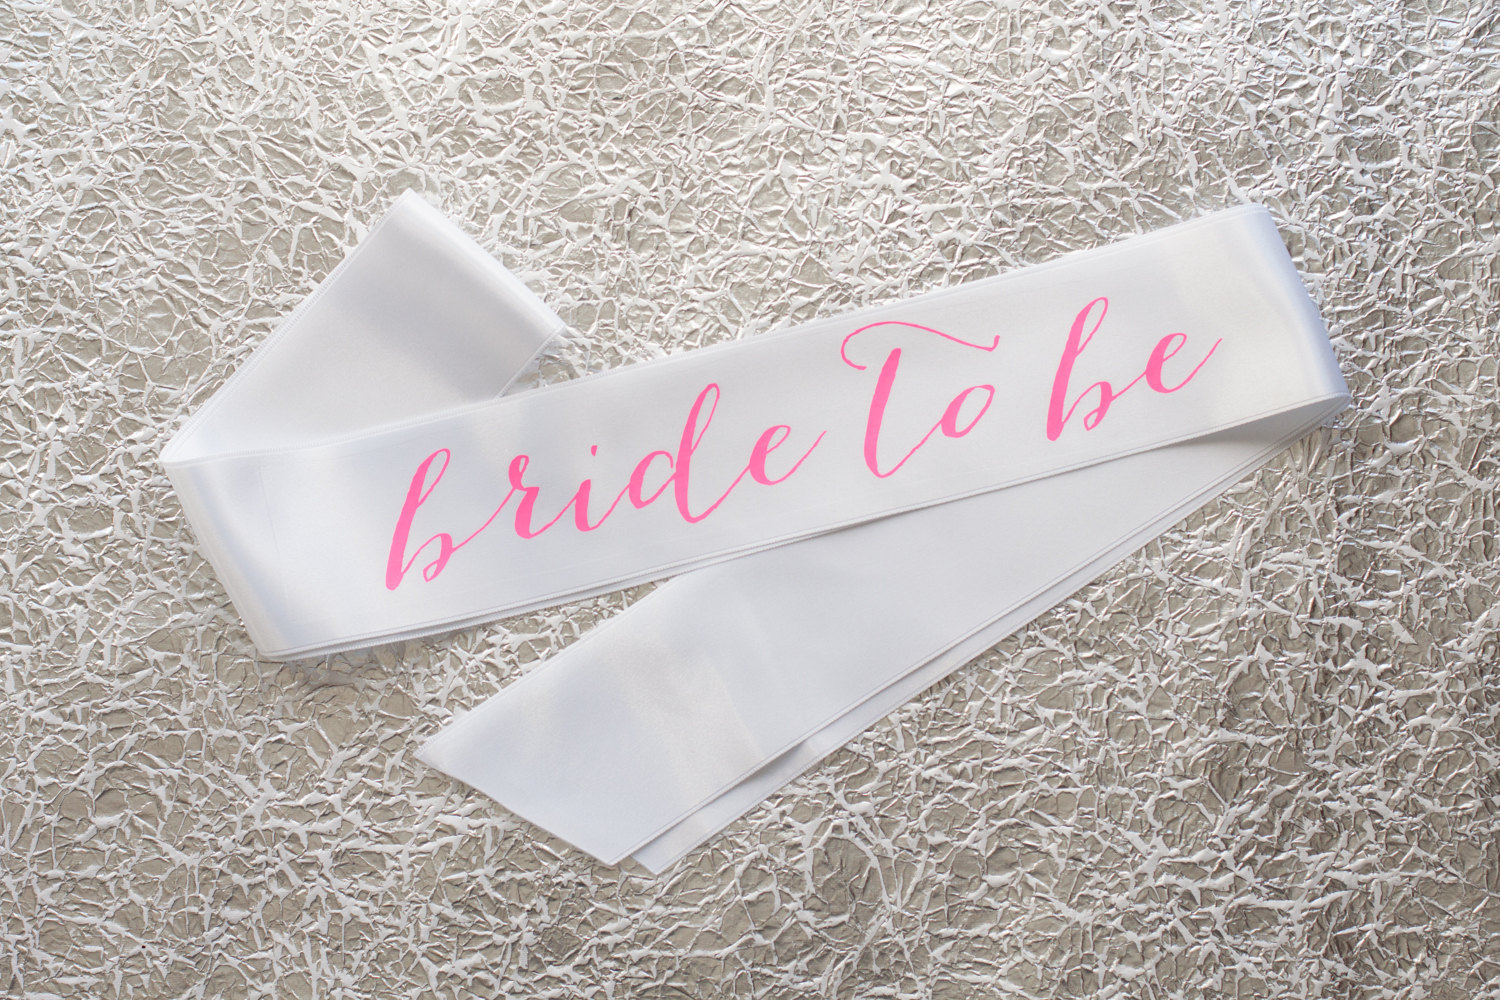 bride to be sash hot pink on white | stylish bachelorette sash ideas | via https://emmalinebride.com/bride/bachelorette-sash-ideas/